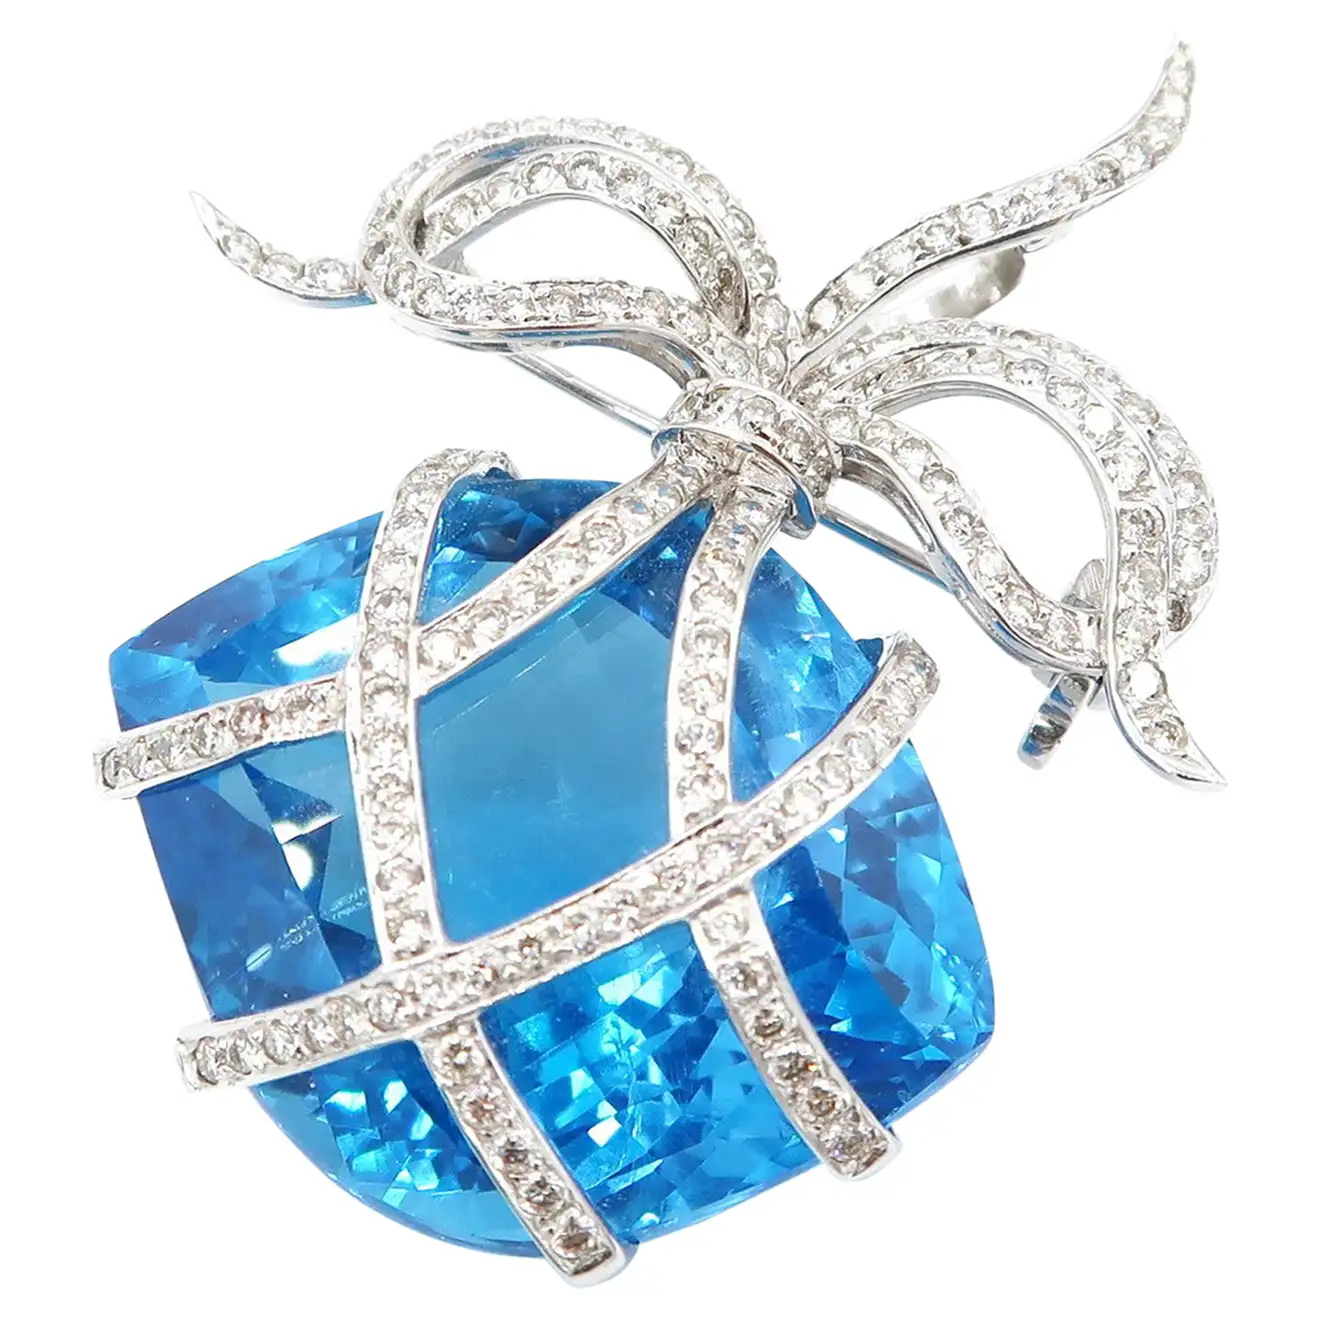 59-Carat Blue Topaz and Diamond Brooch/Pendant, 2019